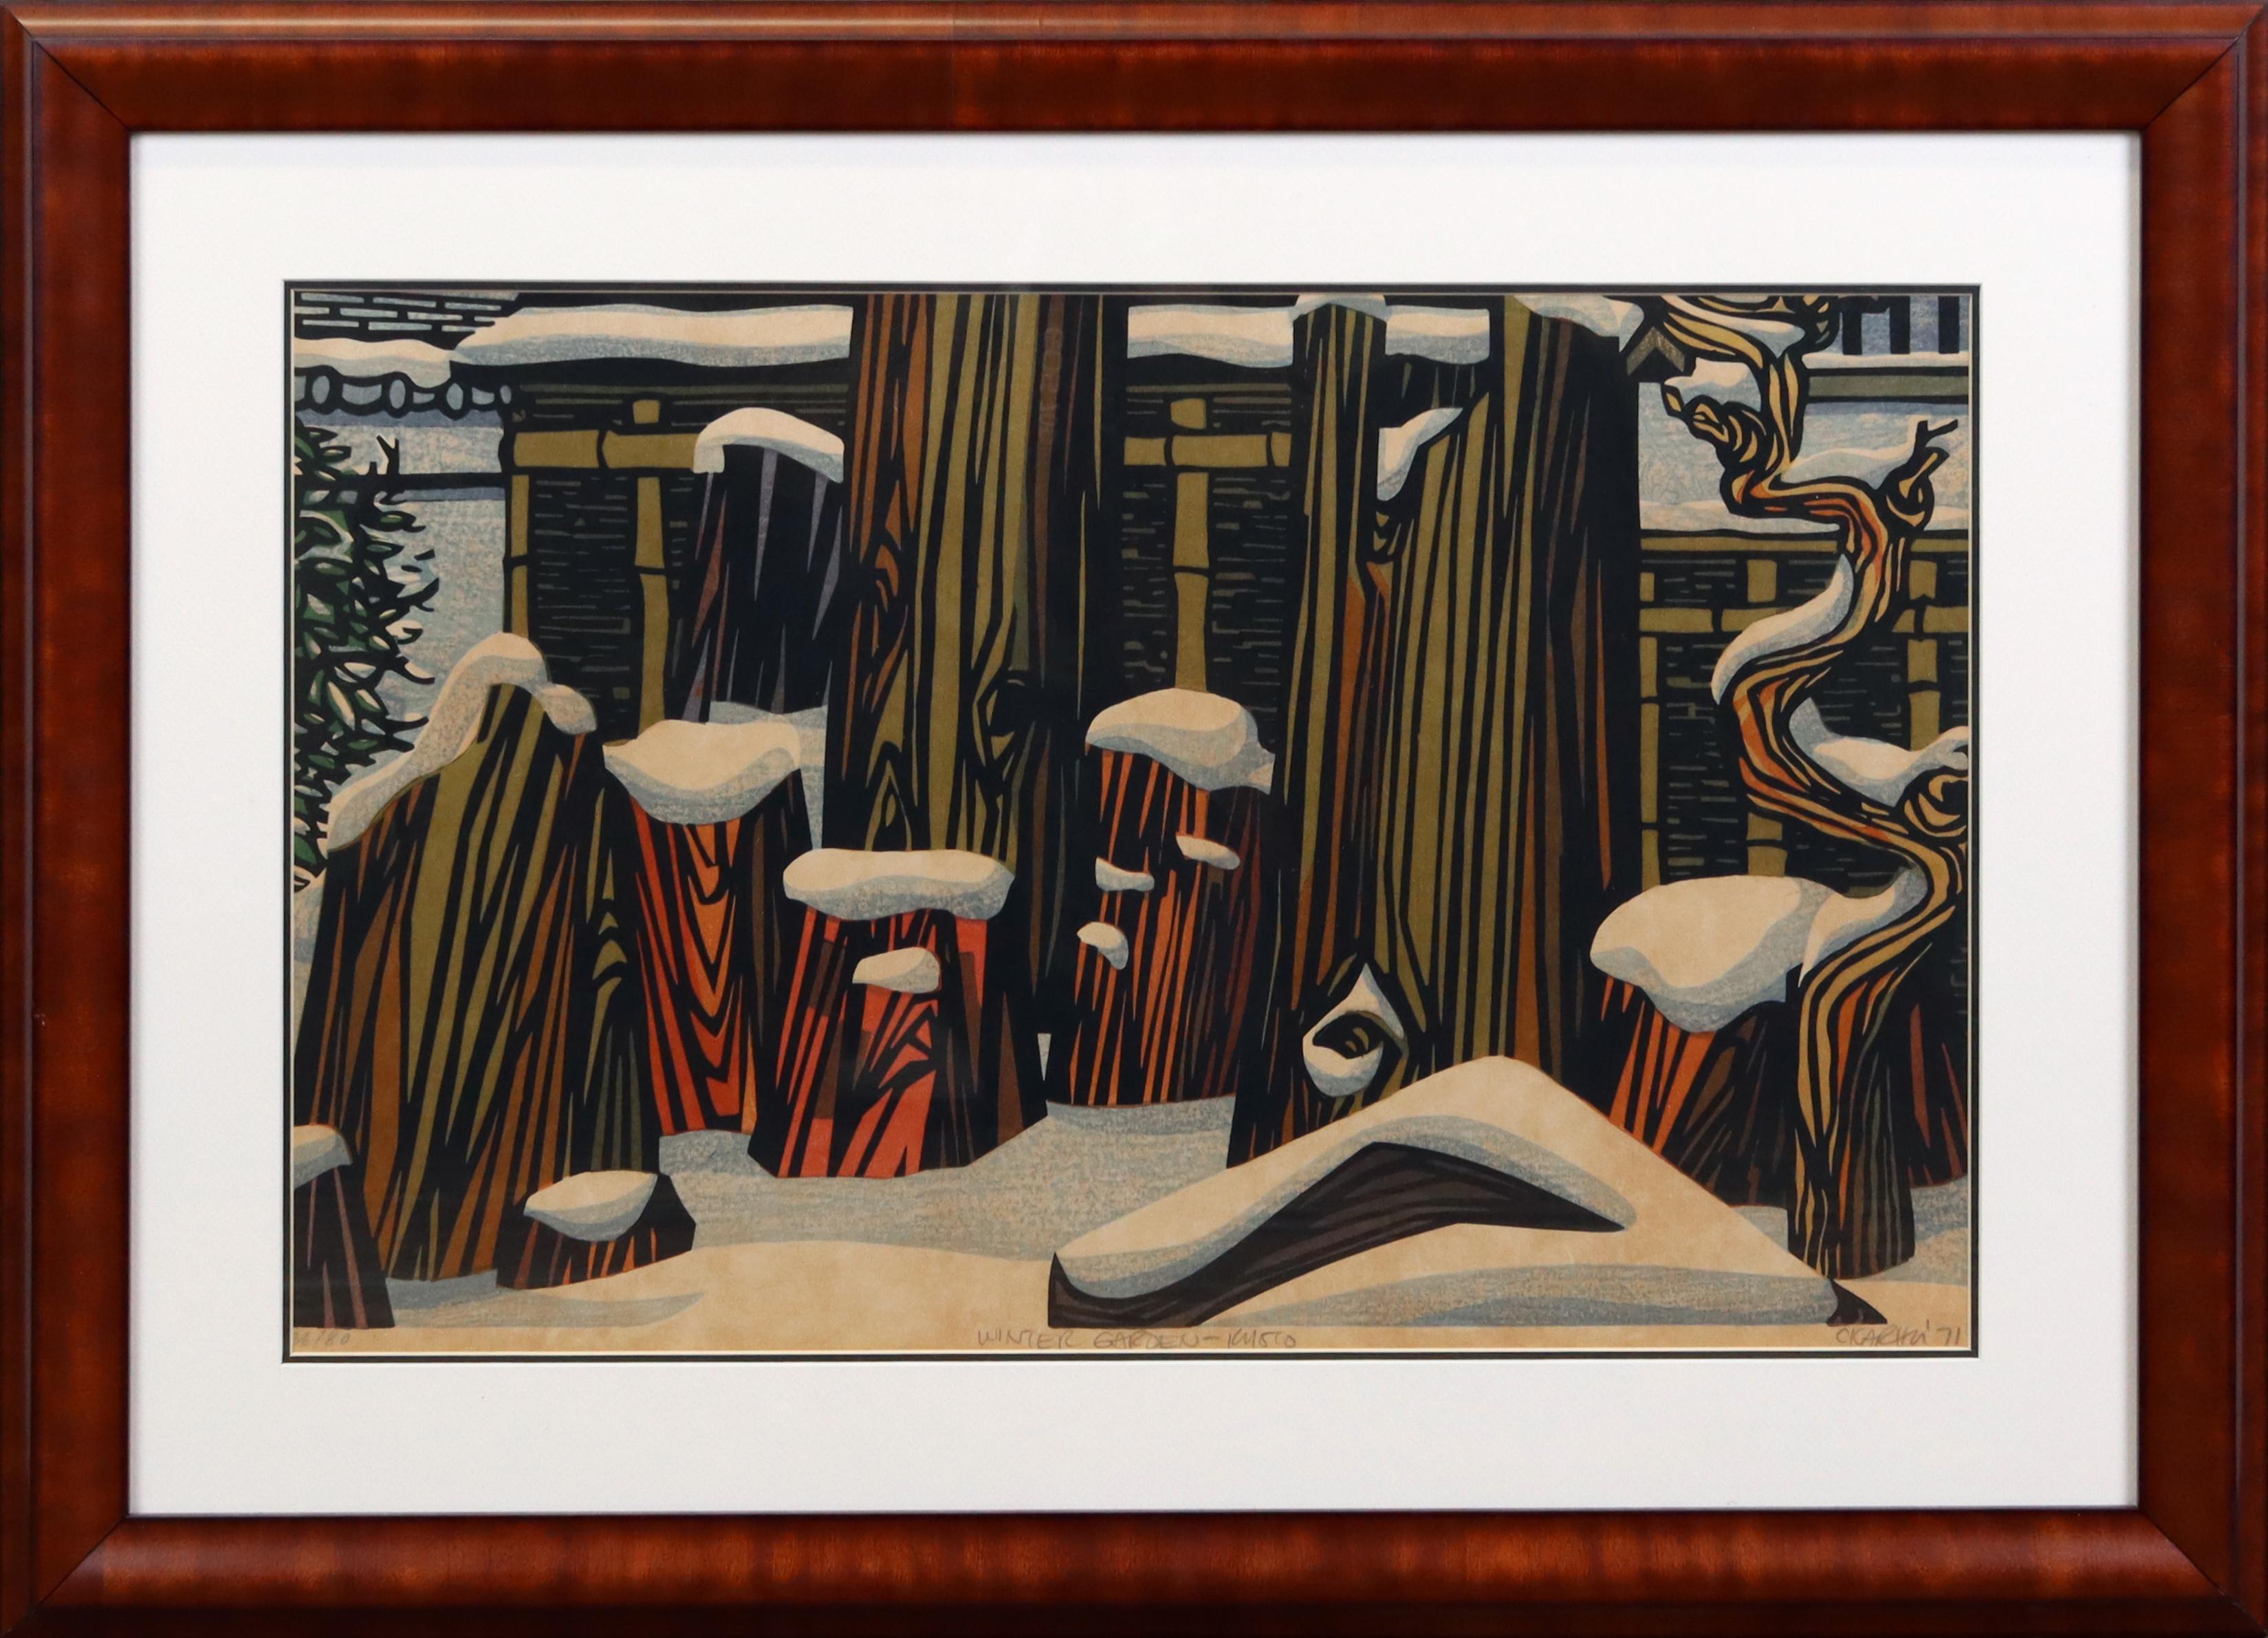 Rare 1971 Clifton Karhu Japanese Woodblock Print Titled "Winter Garden"